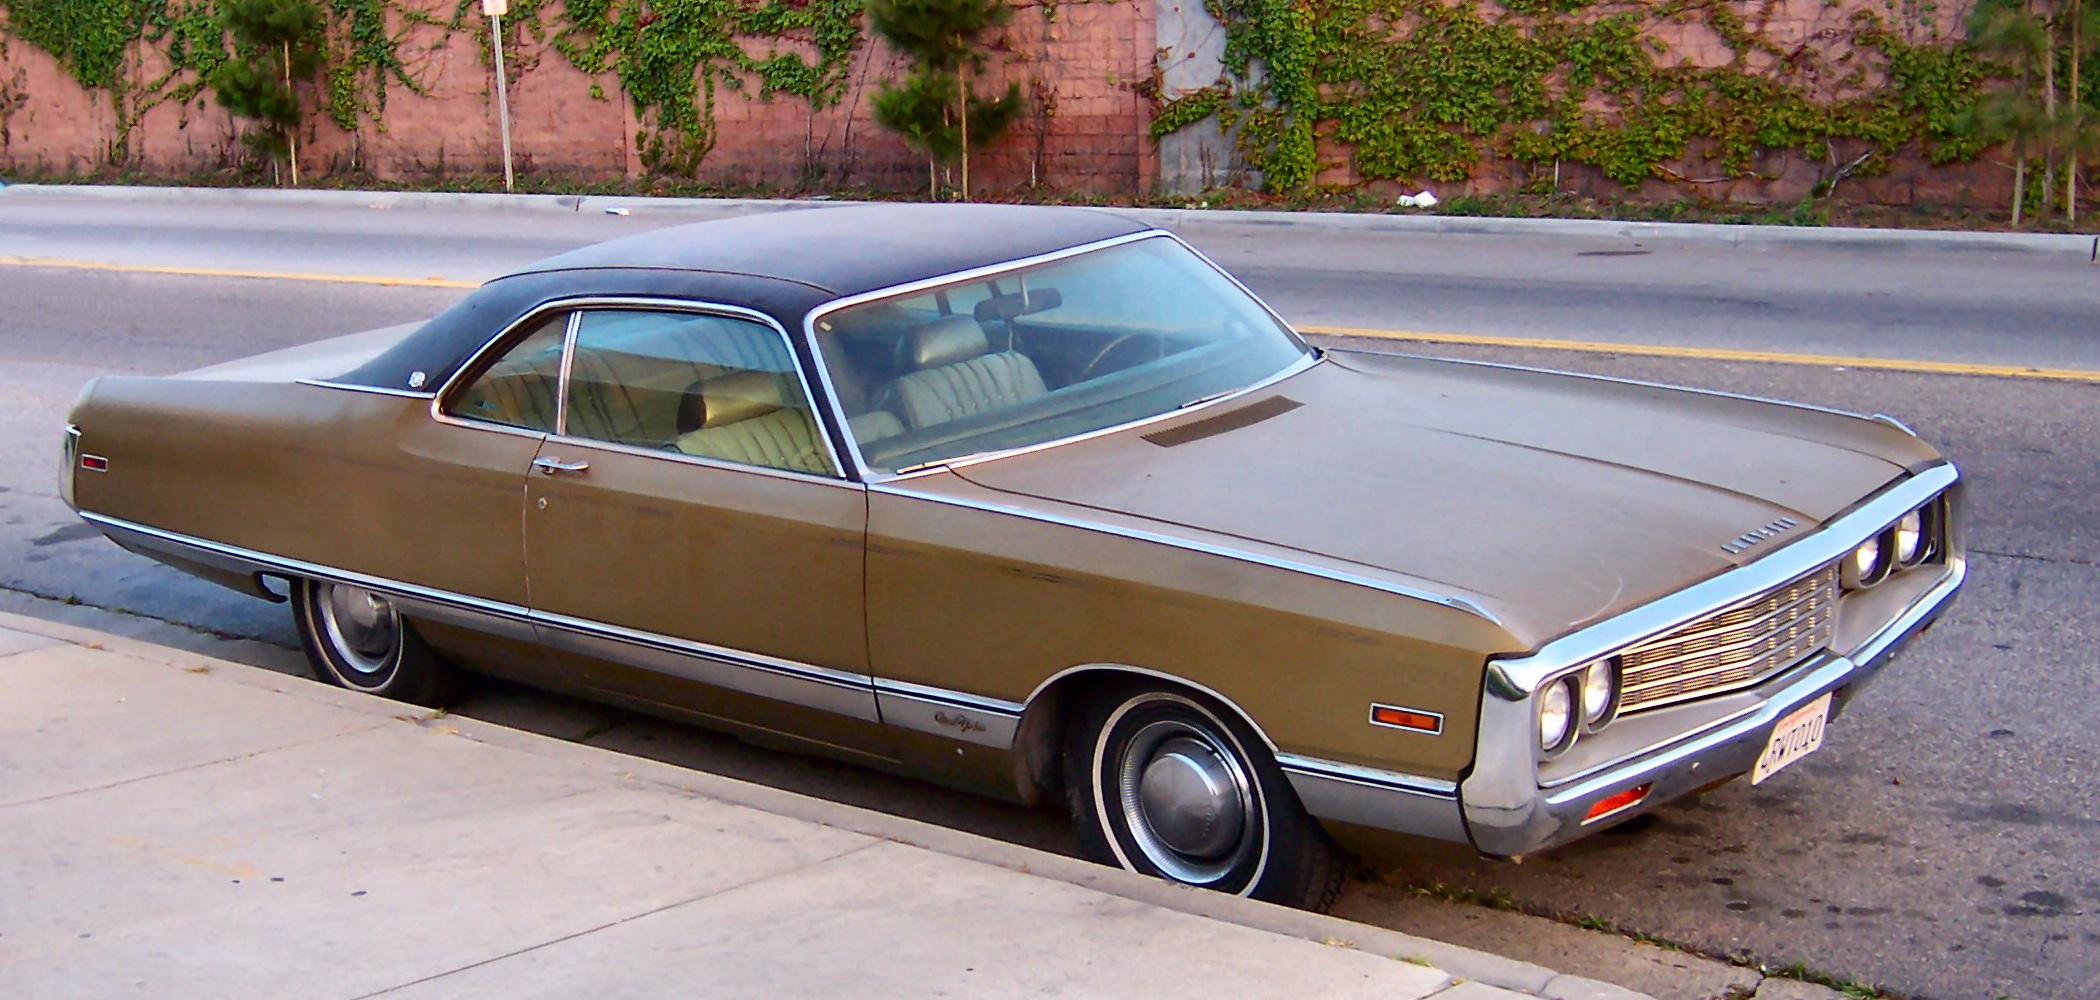 1965 Chrysler newport parts for sale